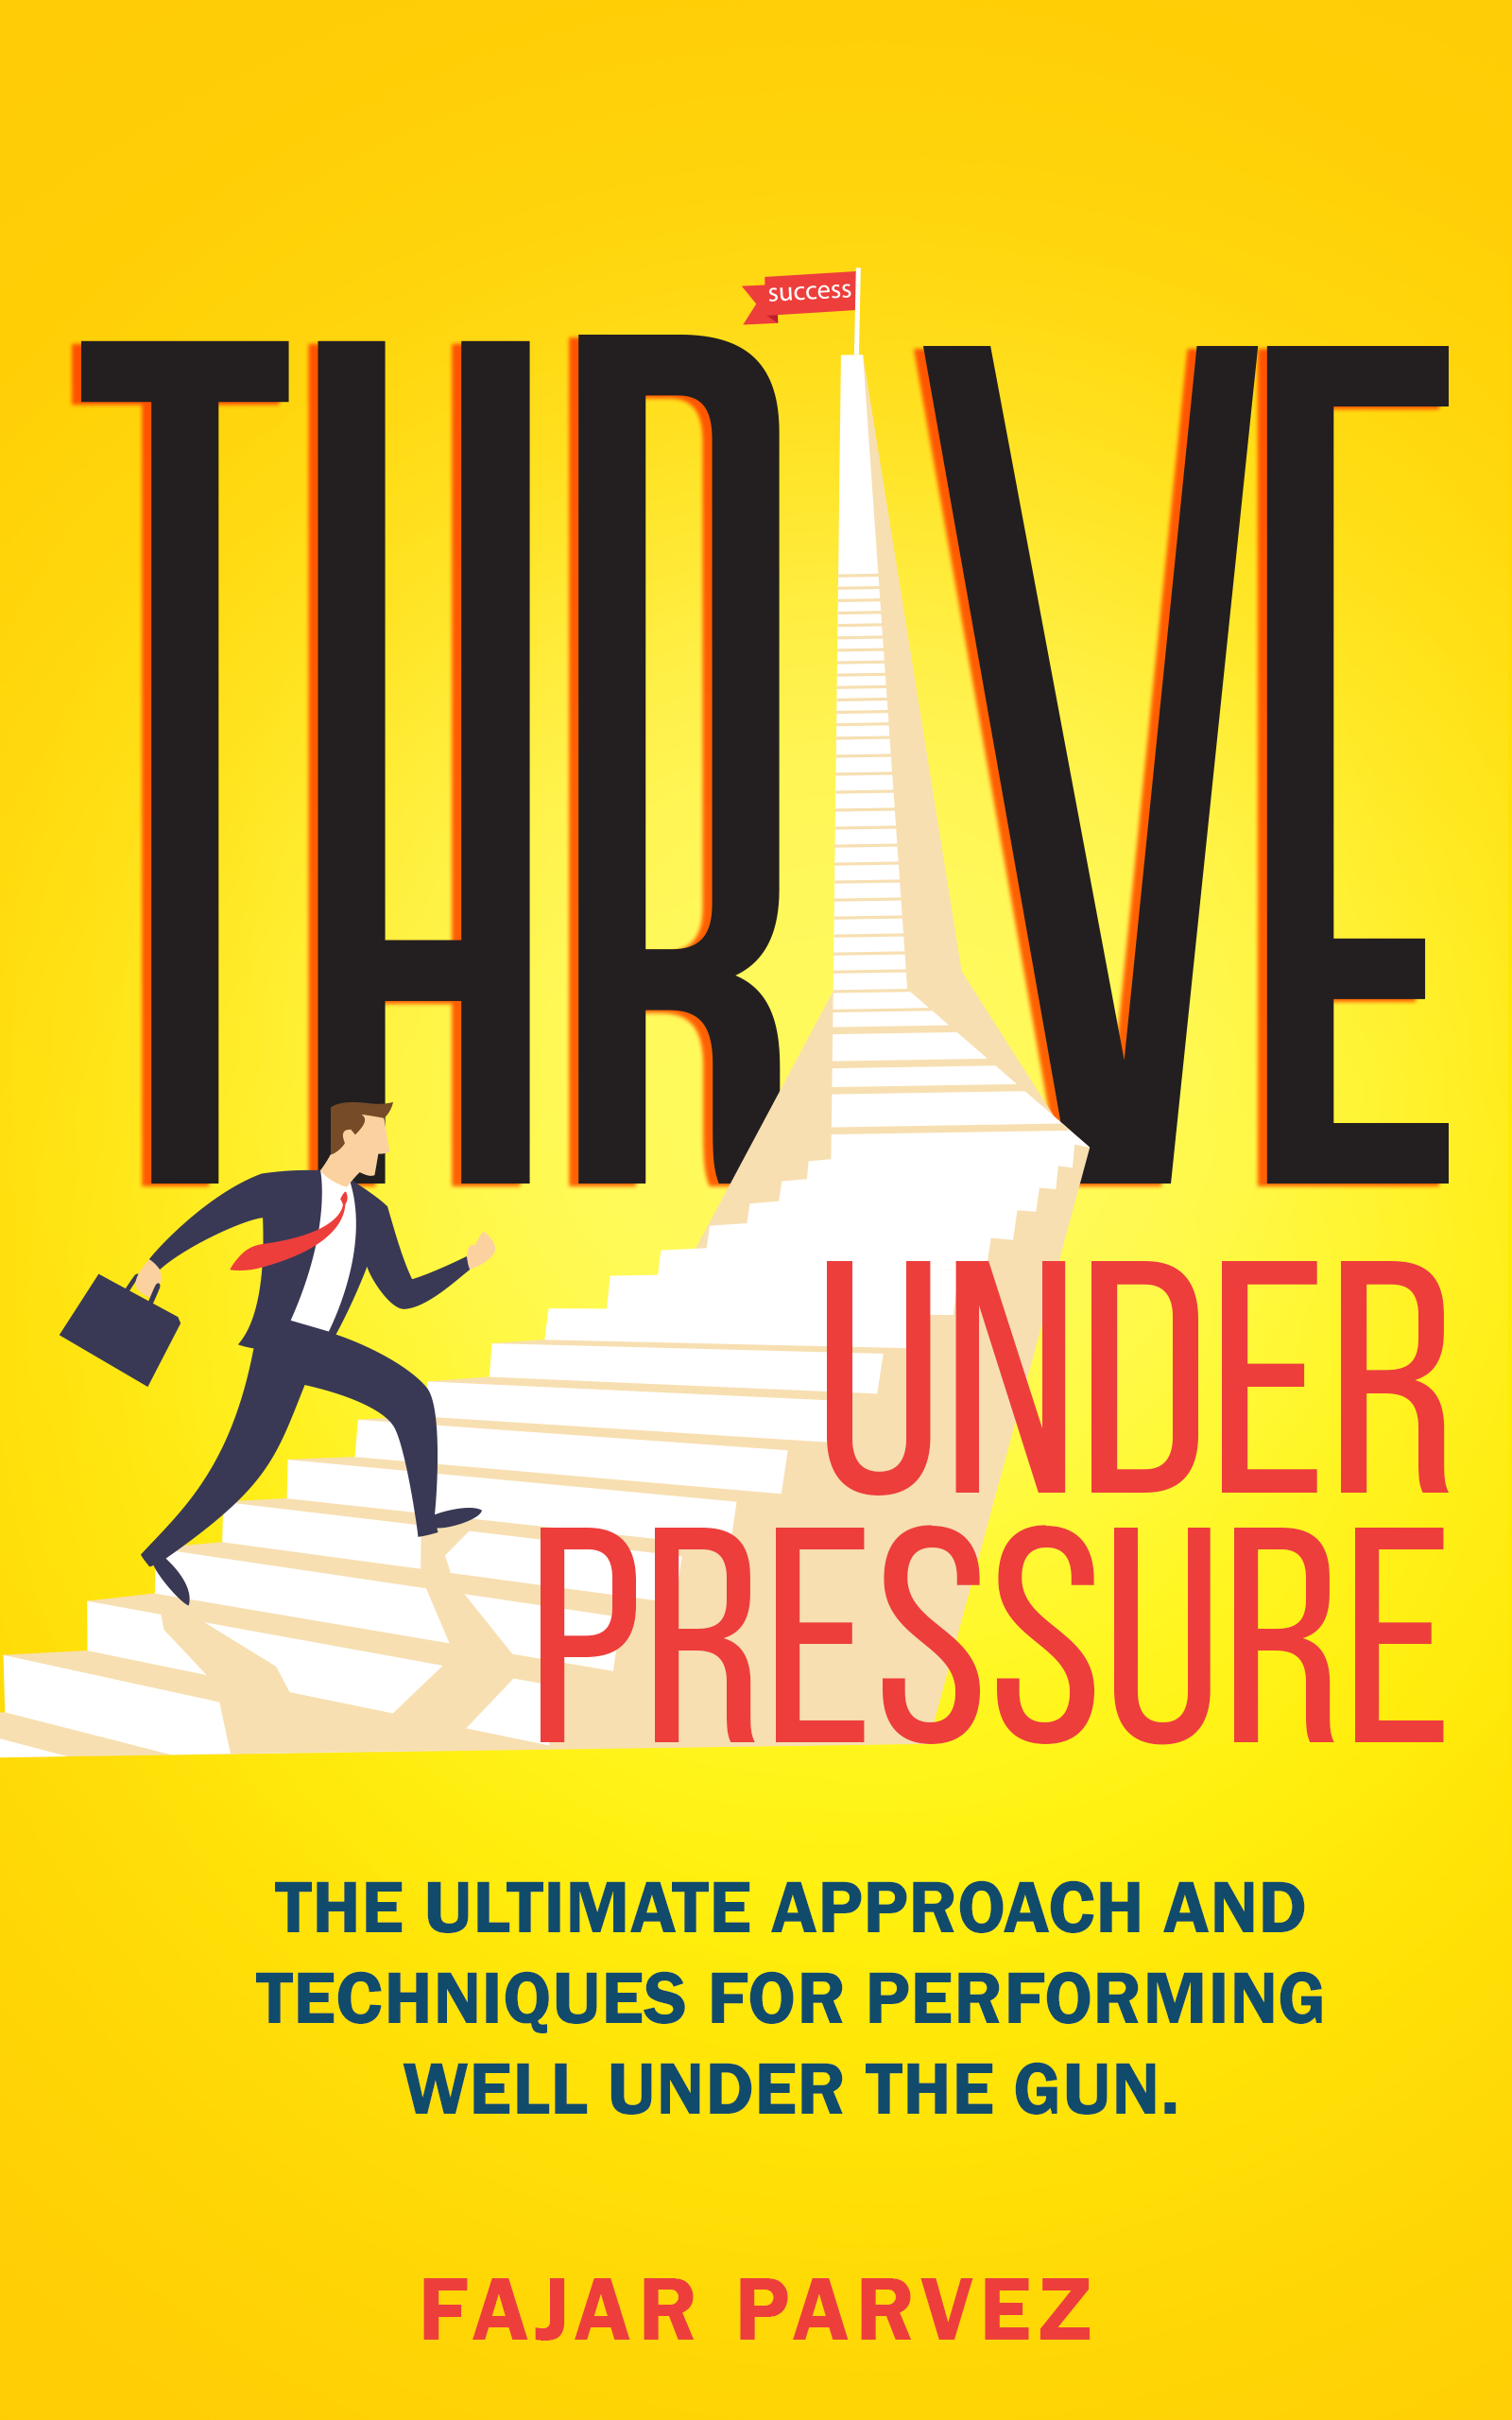 FREE: Thrive Under Pressure by Fajar Parvez